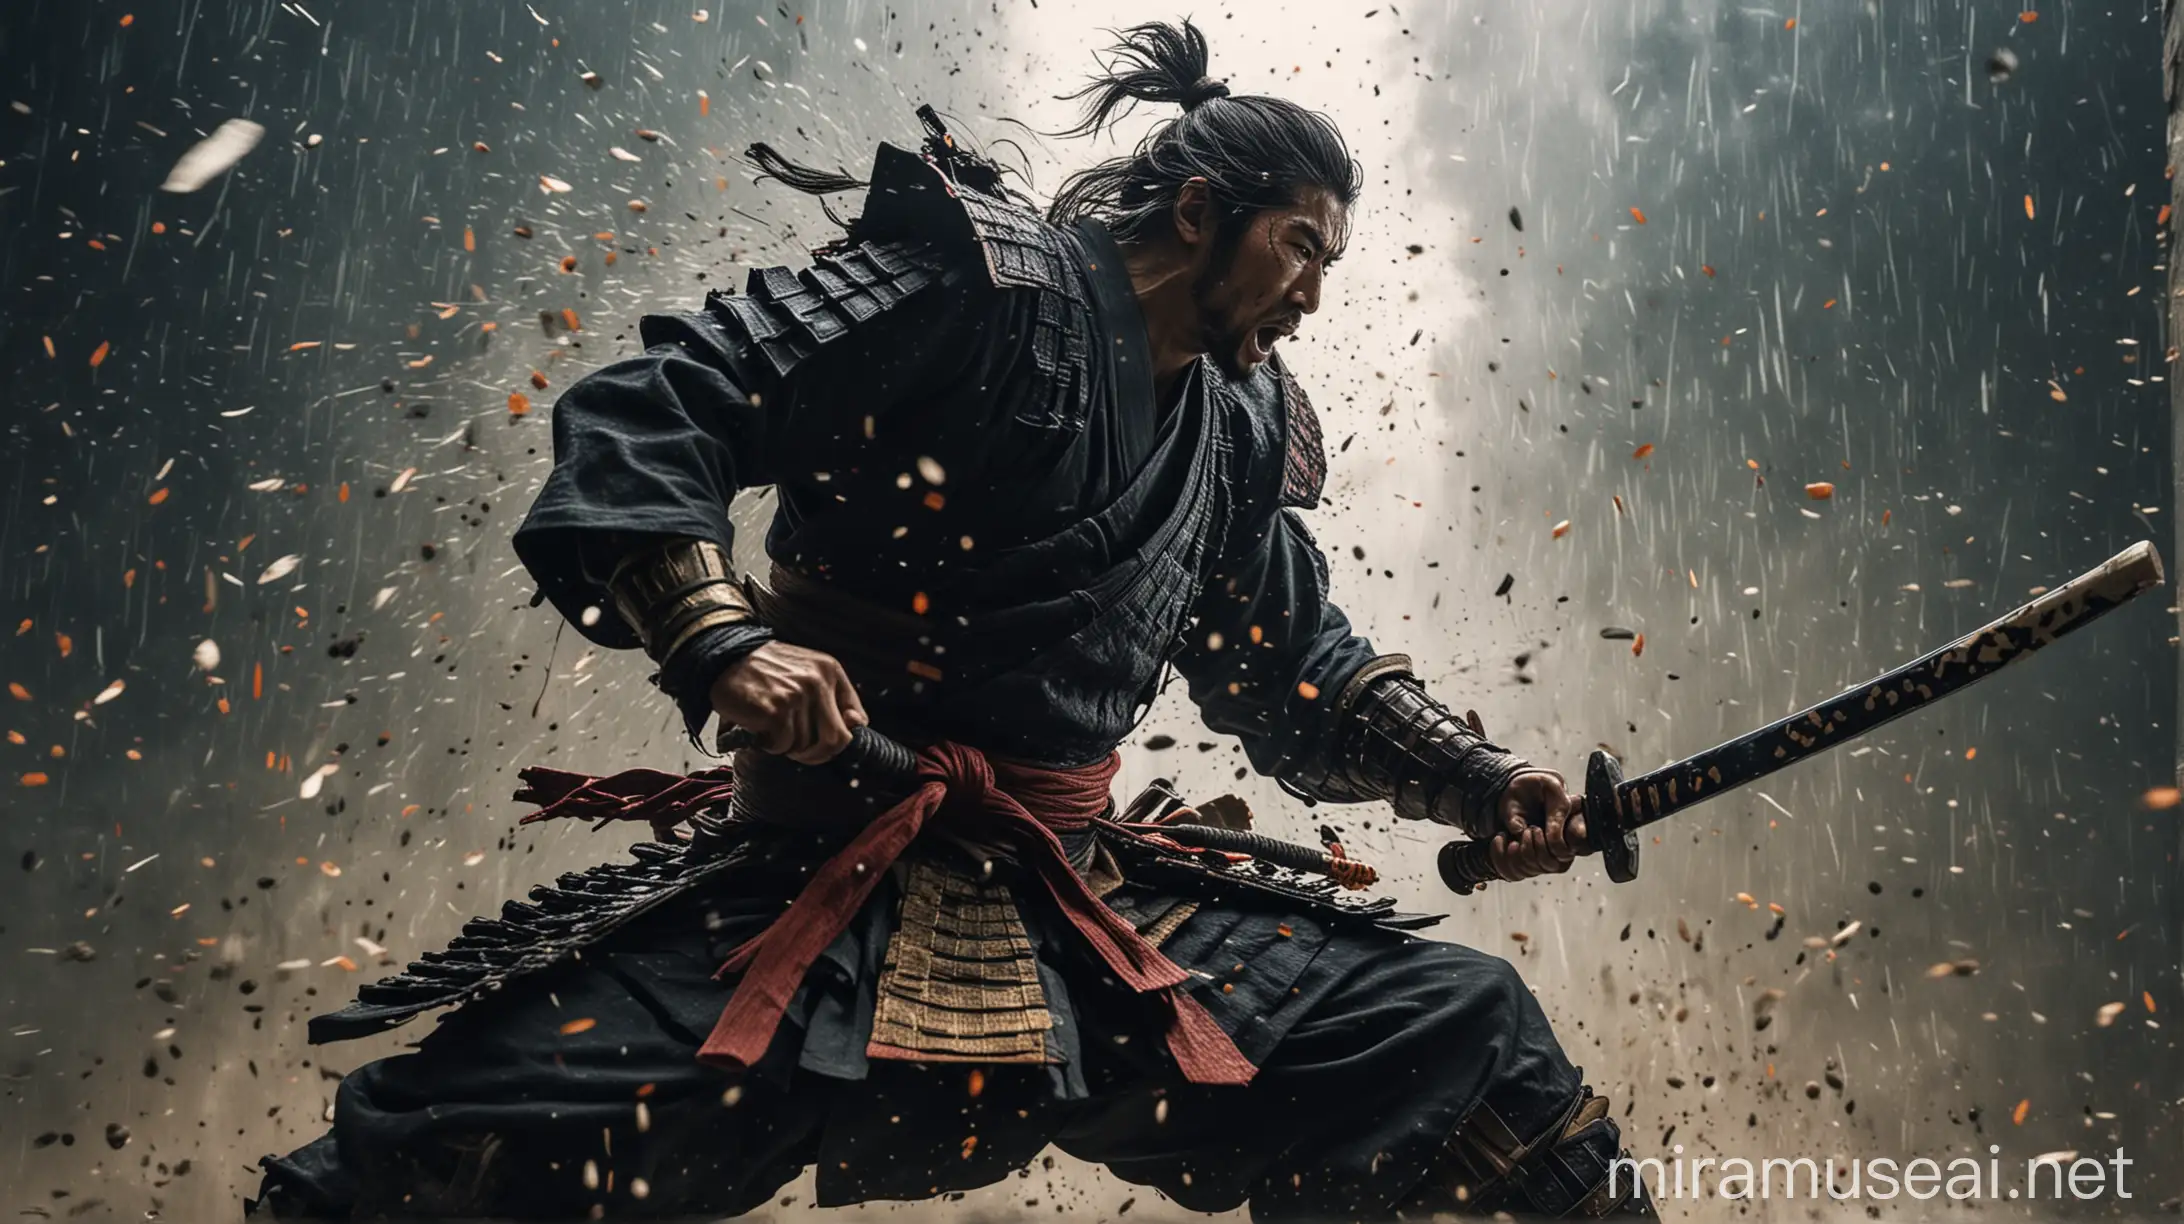 Powerful Samurai Thunderous Slash in CloseUp View